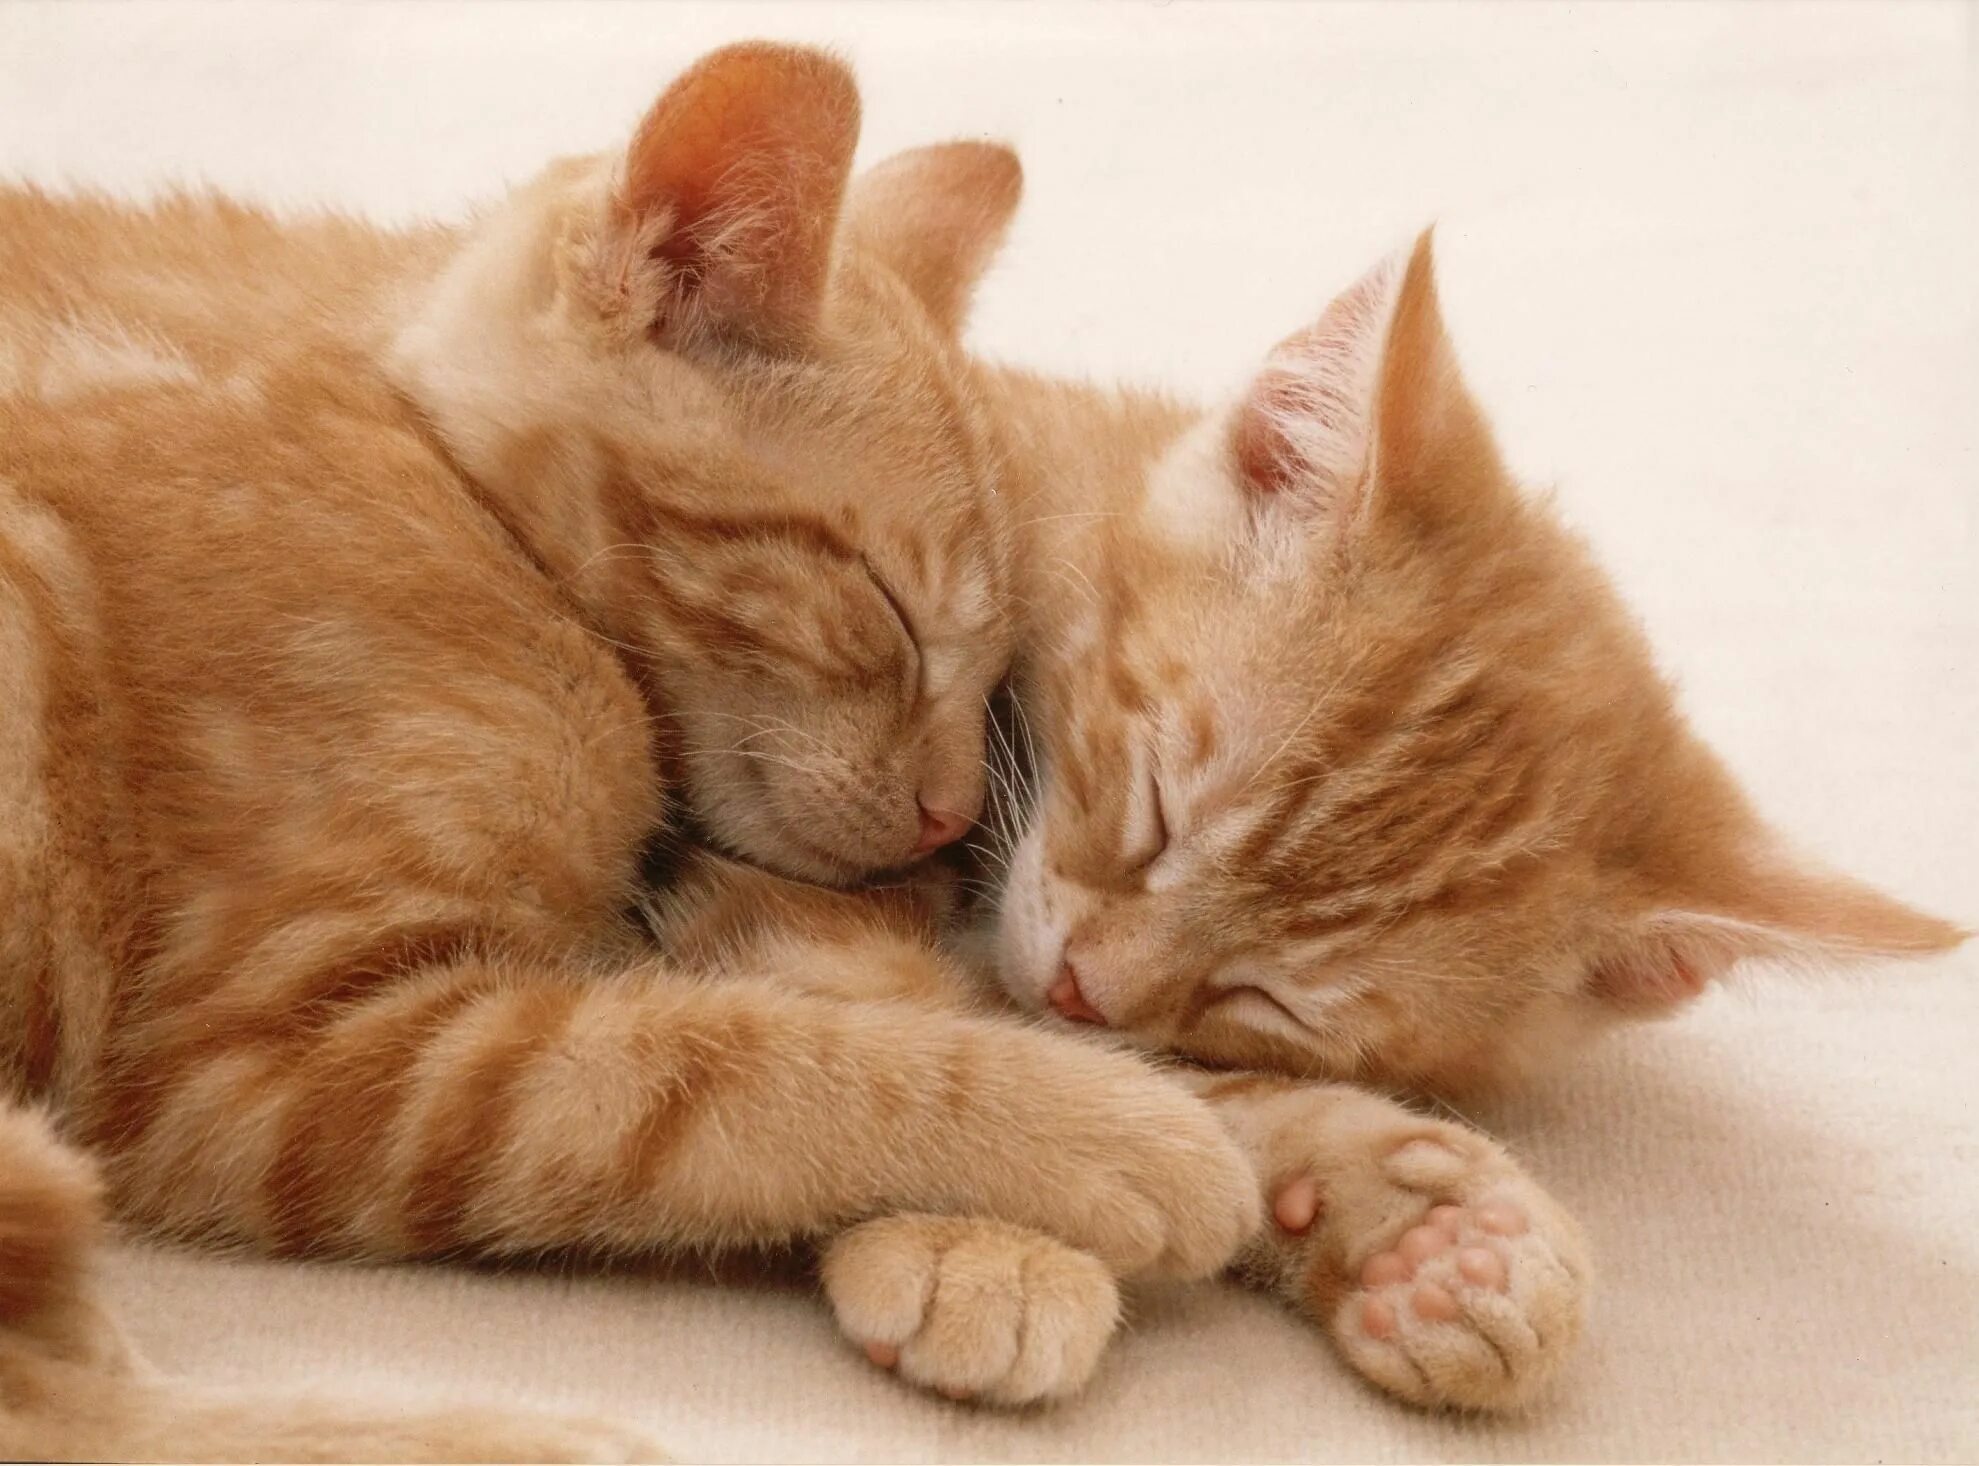 Котики обнимашки. Котята обнимаются. Два рыжих котика обнимаются. Кошки в обнимку. Кошки спят вместе